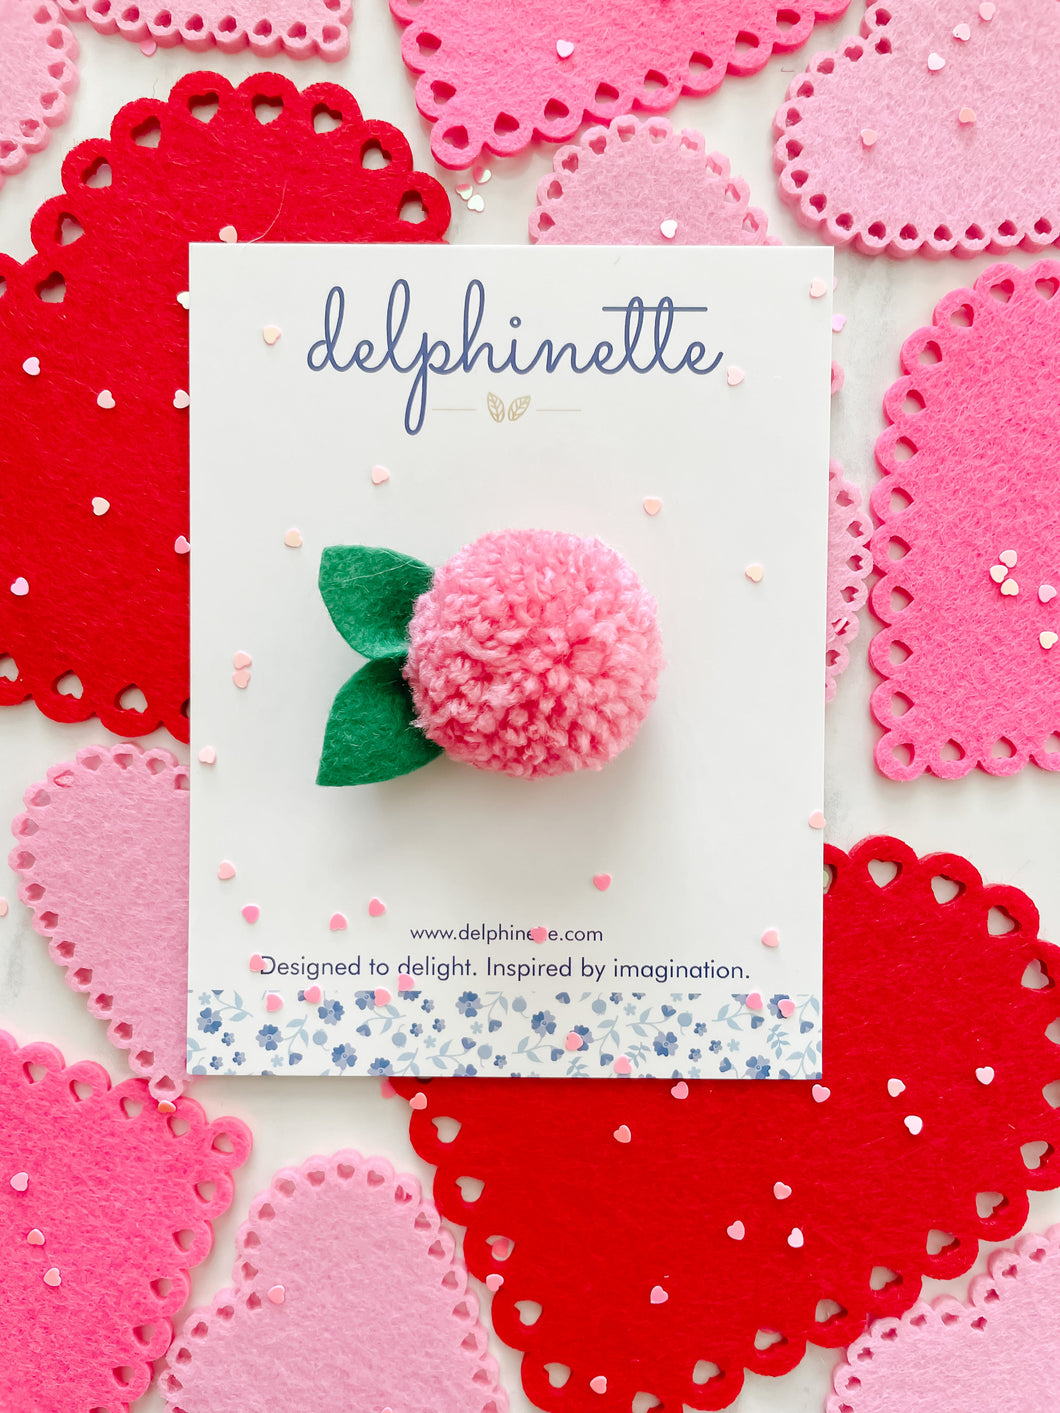 delphinette handmade felt little girl/baby girl hair accessory - a little carnation pink yarn pom pom flower that can be customized as a hair clip, headband or hair tie. Handmade in Canada.